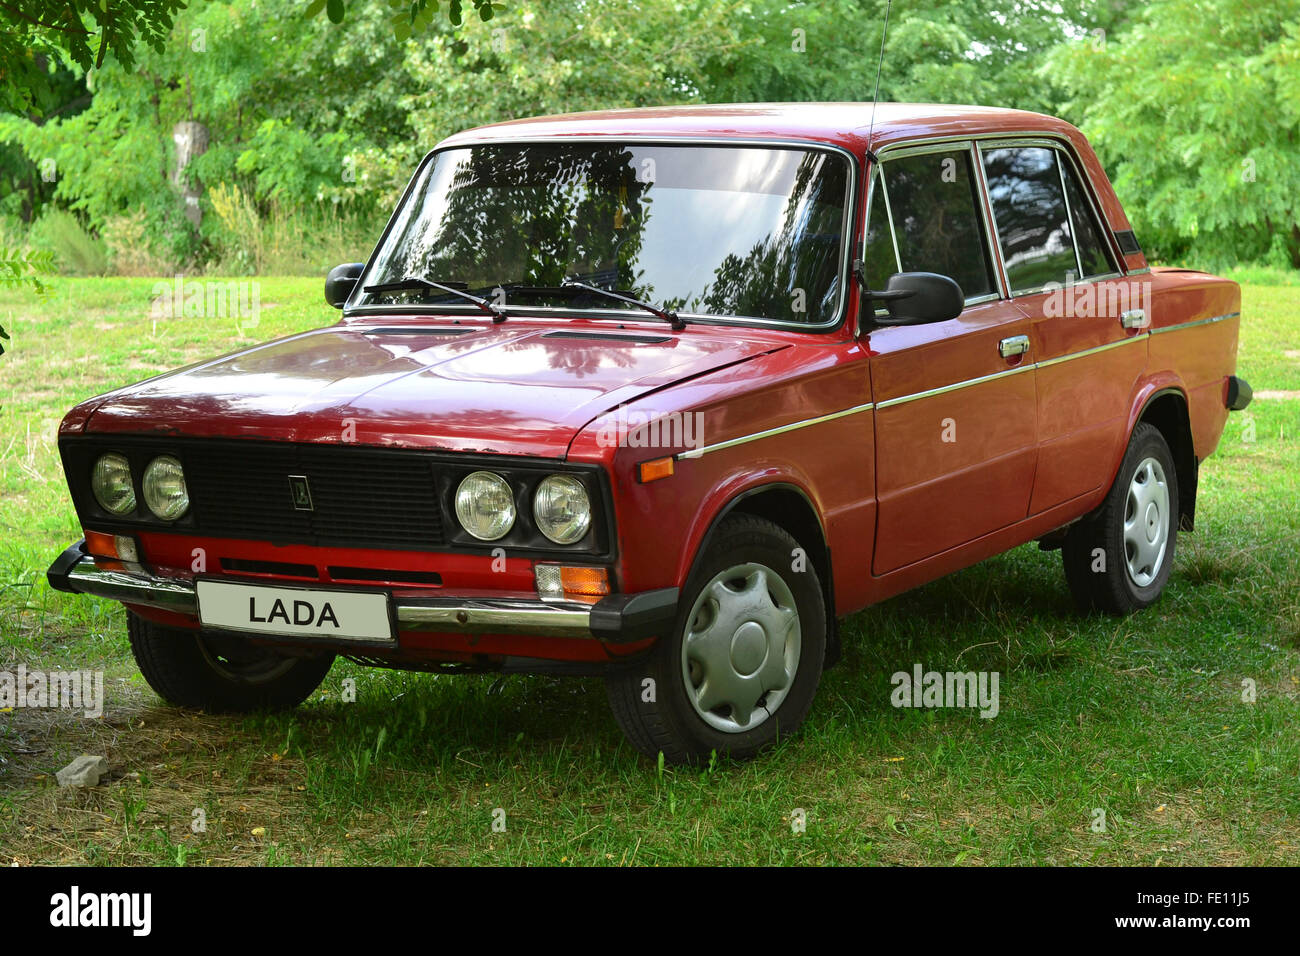 Red Soviet car Lada Vaz-1600 parked under the trees Stock Photo